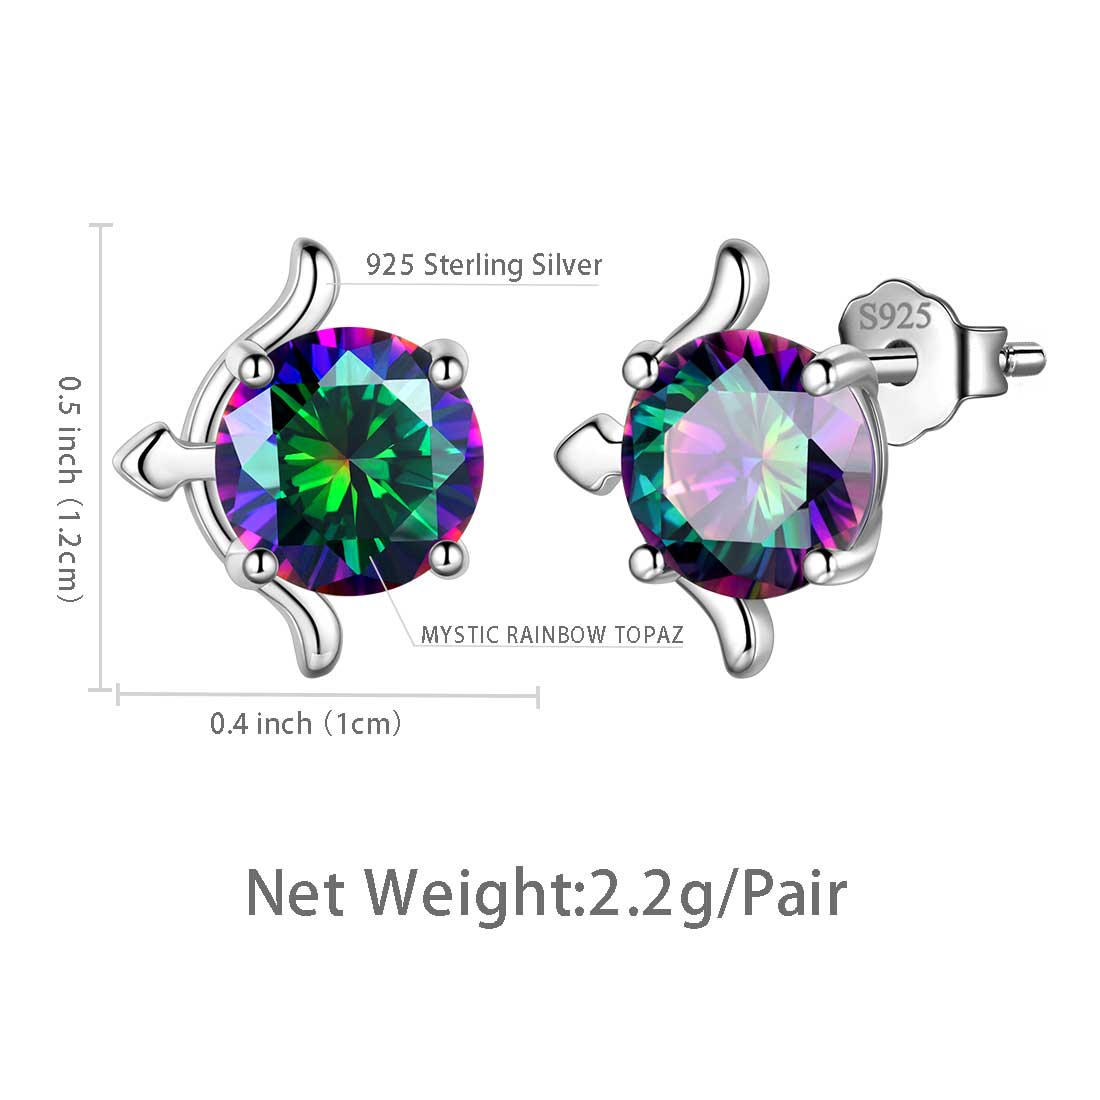 Sagittarius Stud Earrings Sterling Silver Mystic Rainbow Topaz - Earrings - Aurora Tears Jewelry